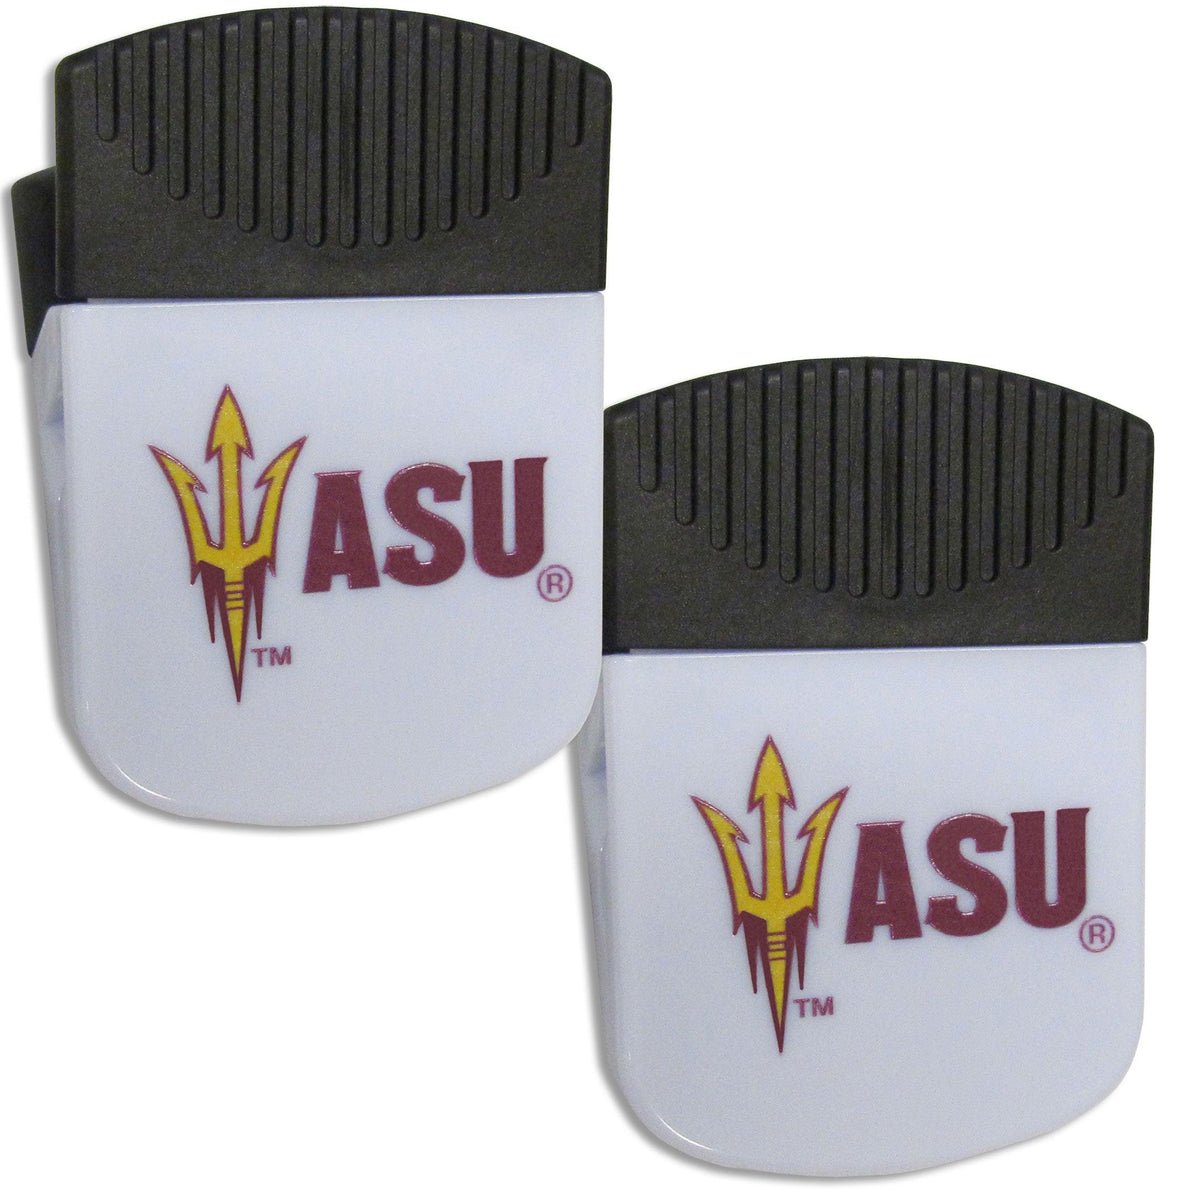 Arizona St. Sun Devils Chip Clip Magnet with Bottle Opener, 2 pack - Flyclothing LLC